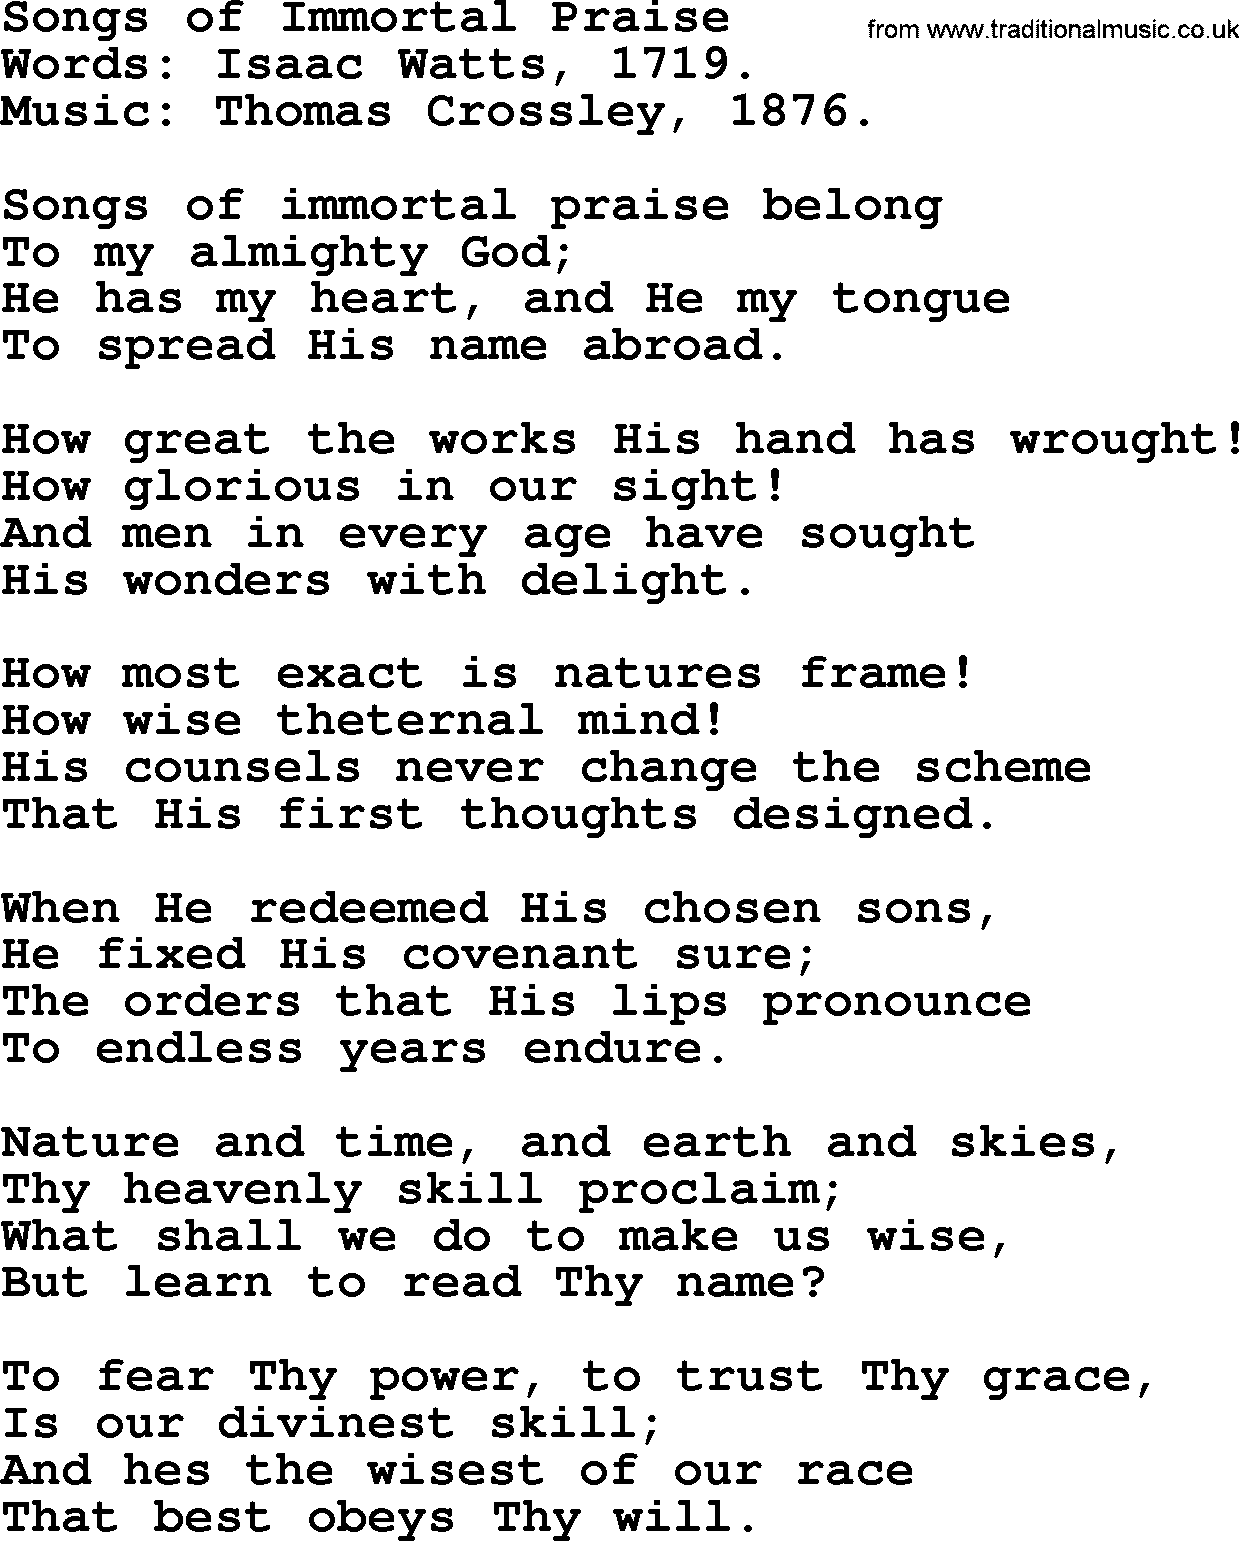 Isaac Watts Christian hymn: Songs of Immortal Praise- lyricss